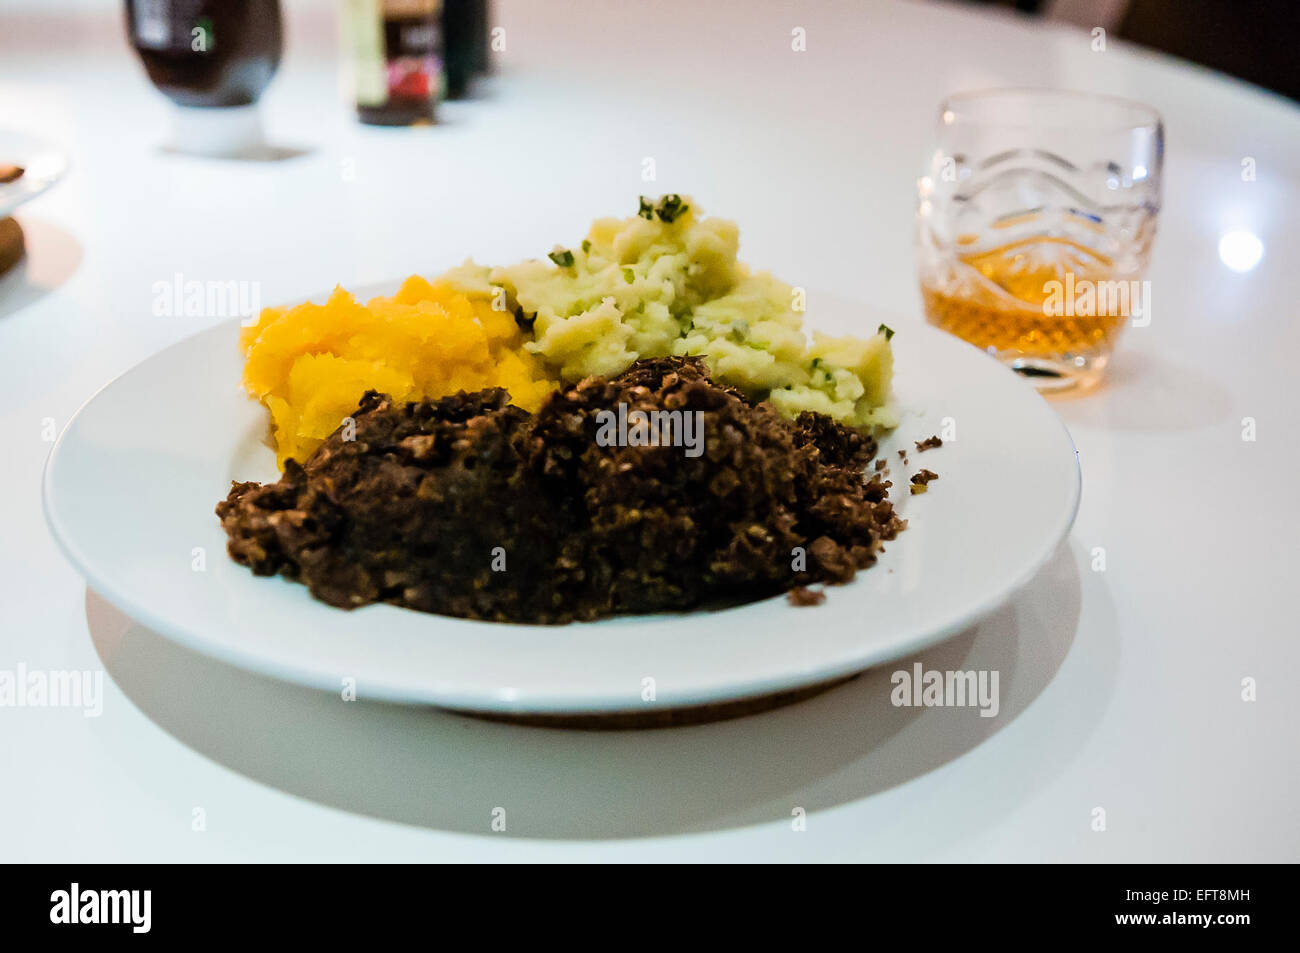 Haggis, neeps (turnips) and tatties (potatoes) with a glass of whisky on Burns night. Stock Photo